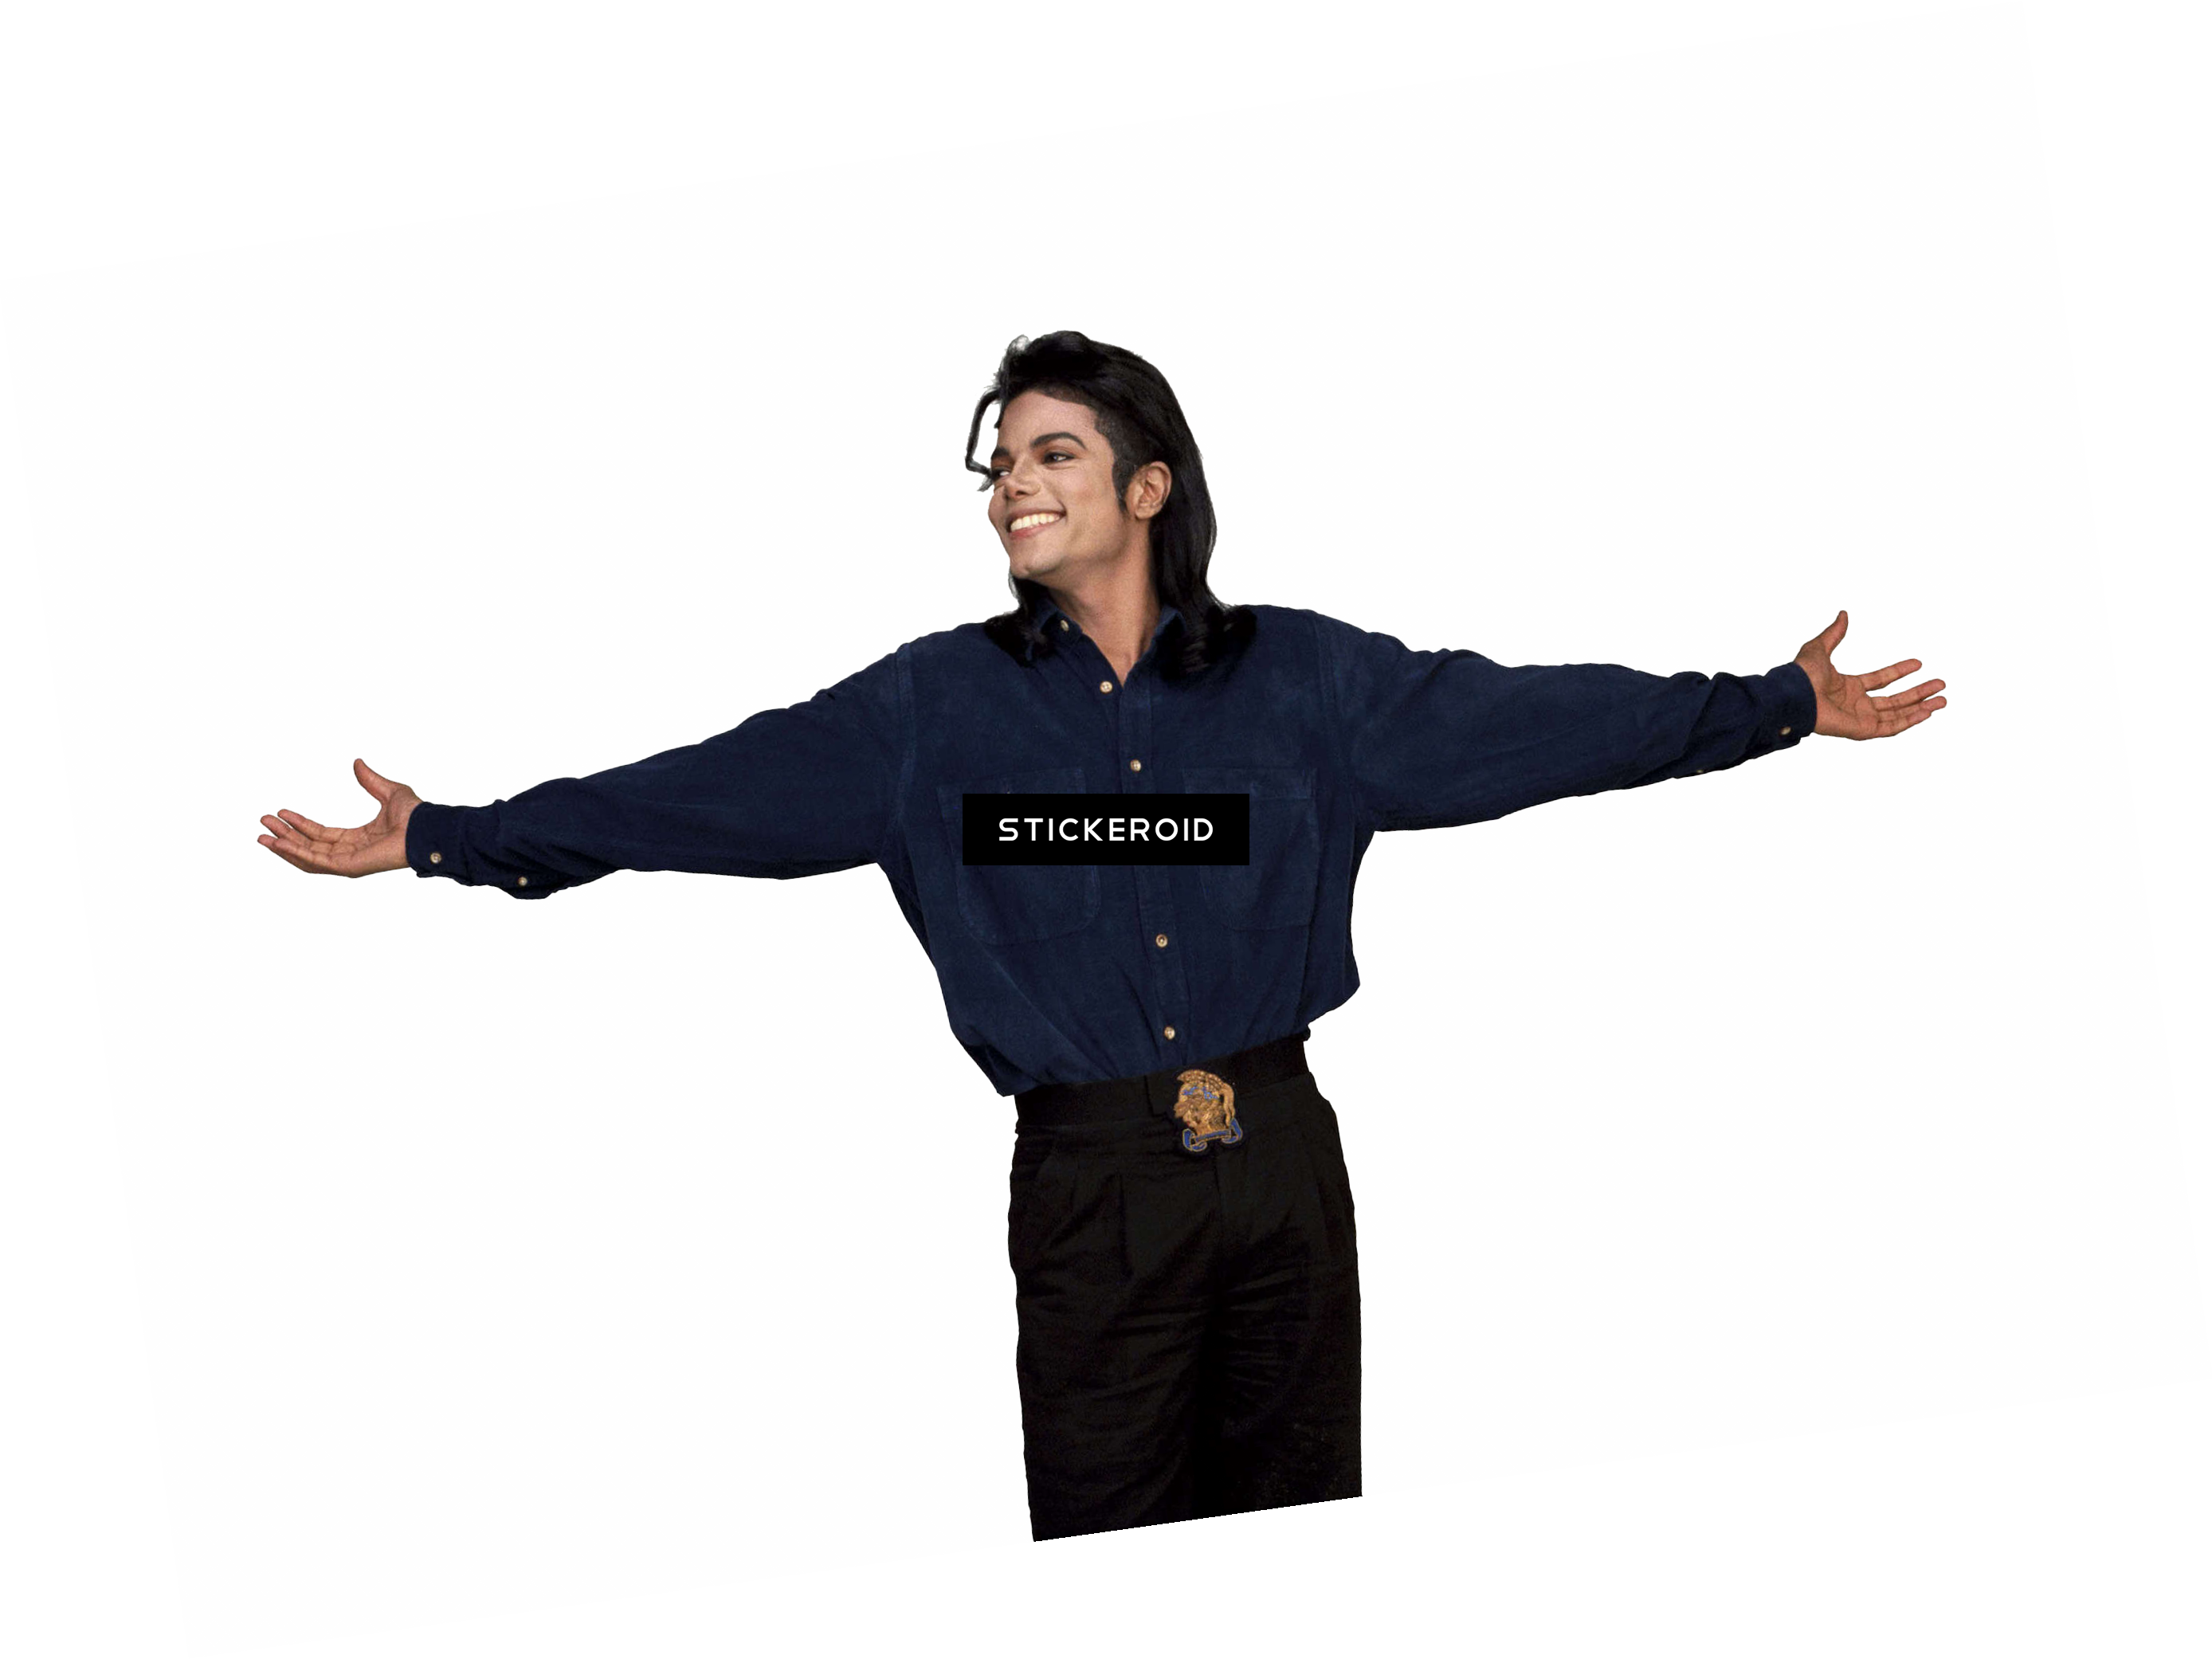 Michael Jackson - My Friend Michael: An Ordinary Friendship (2776x2082)